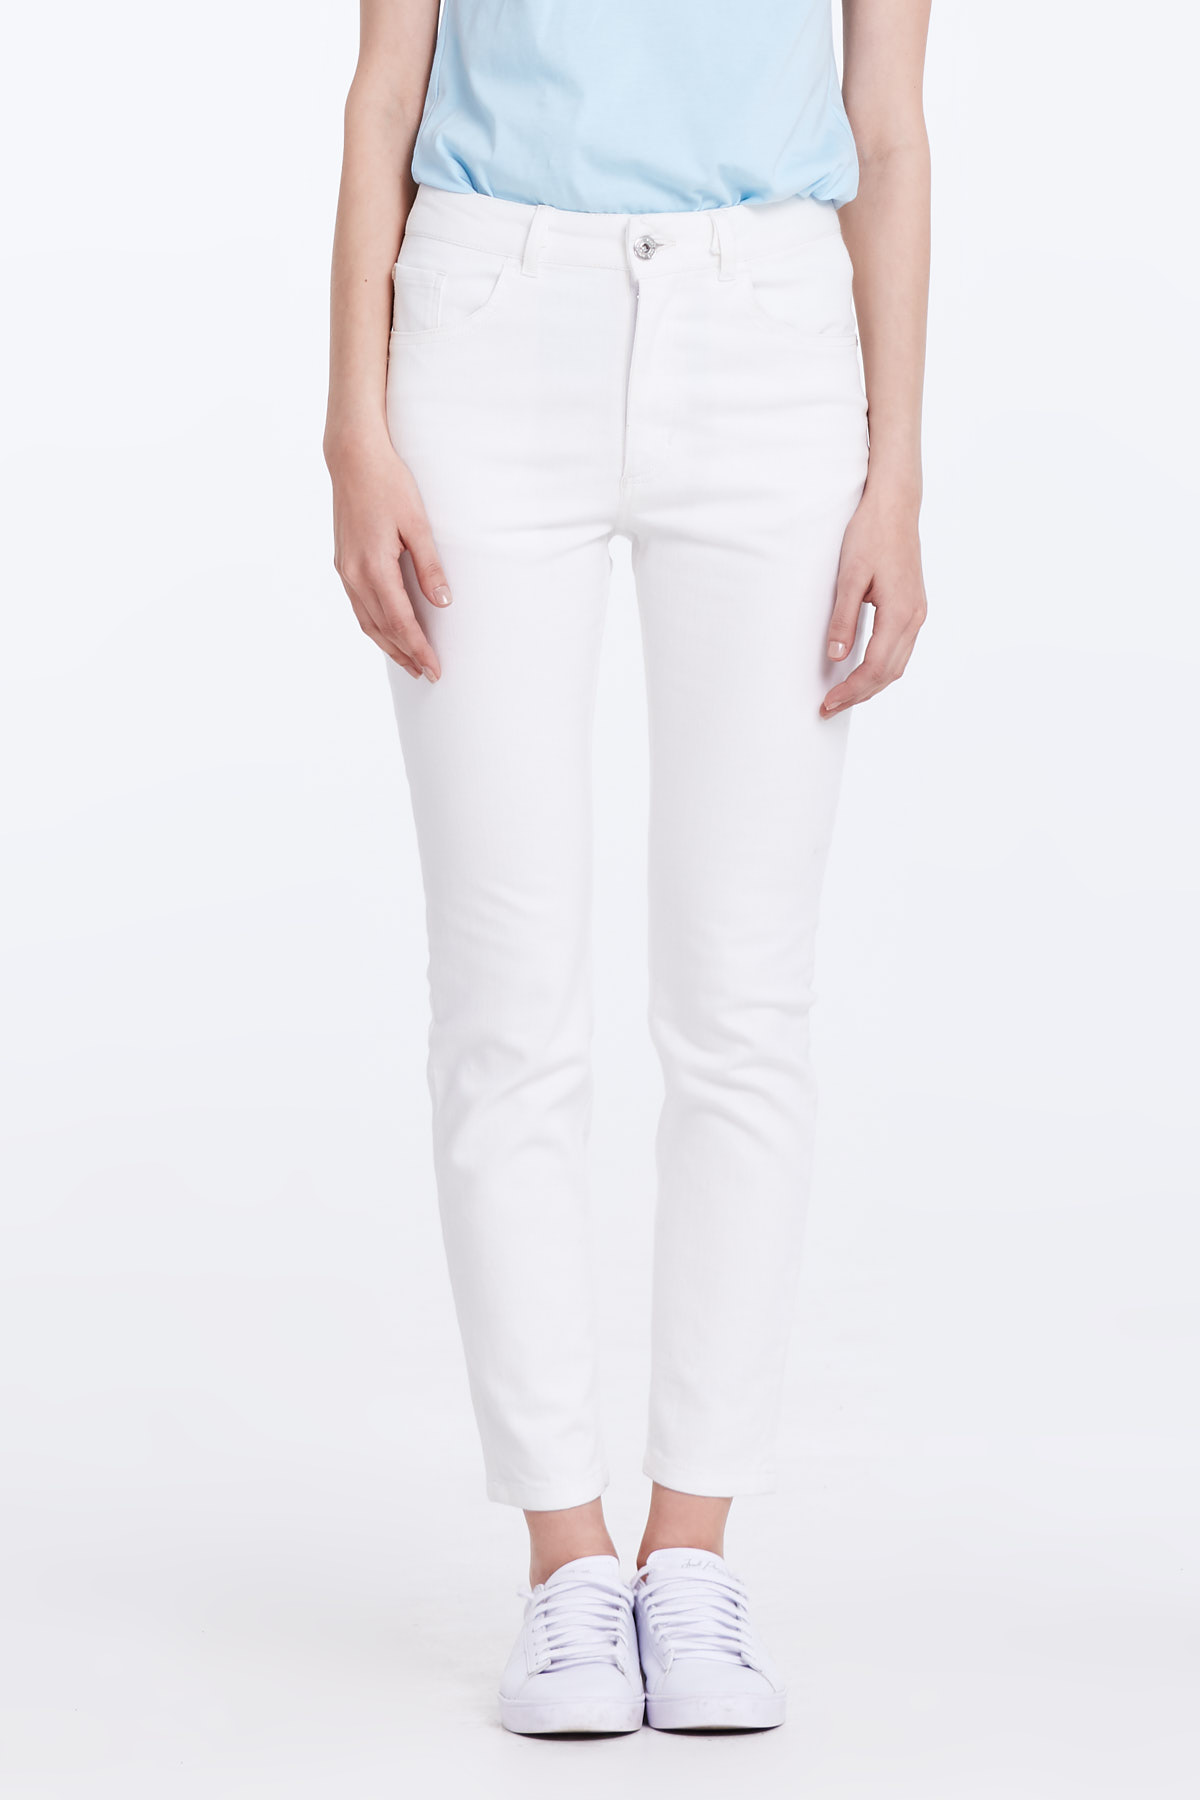 Skinny white jeans, photo 1